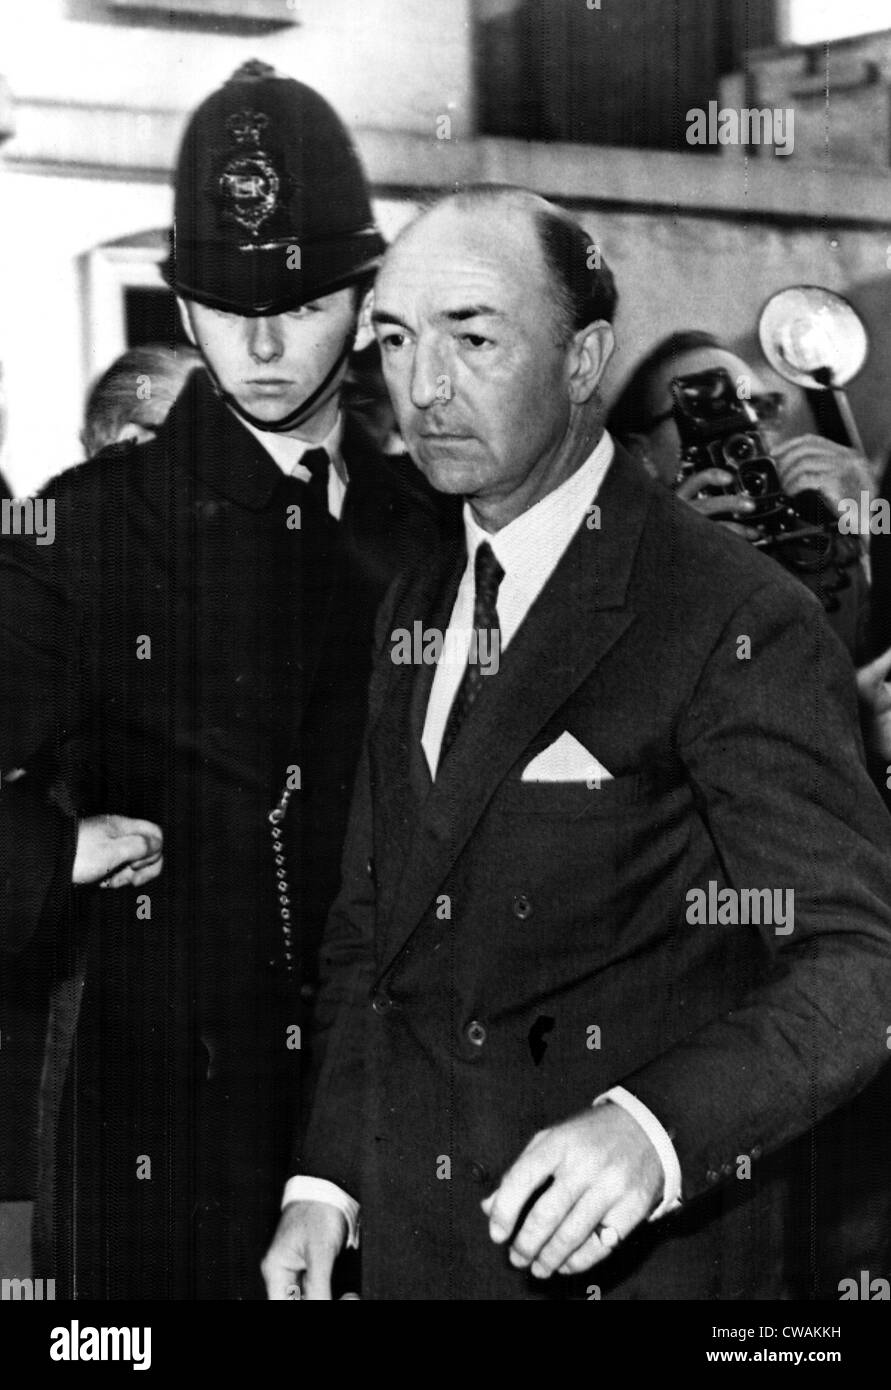 British Minister of War John Profumo retuns home after admitting an affair with Christine Keeler, June 18, 1963. Courtesy: CSU Stock Photo